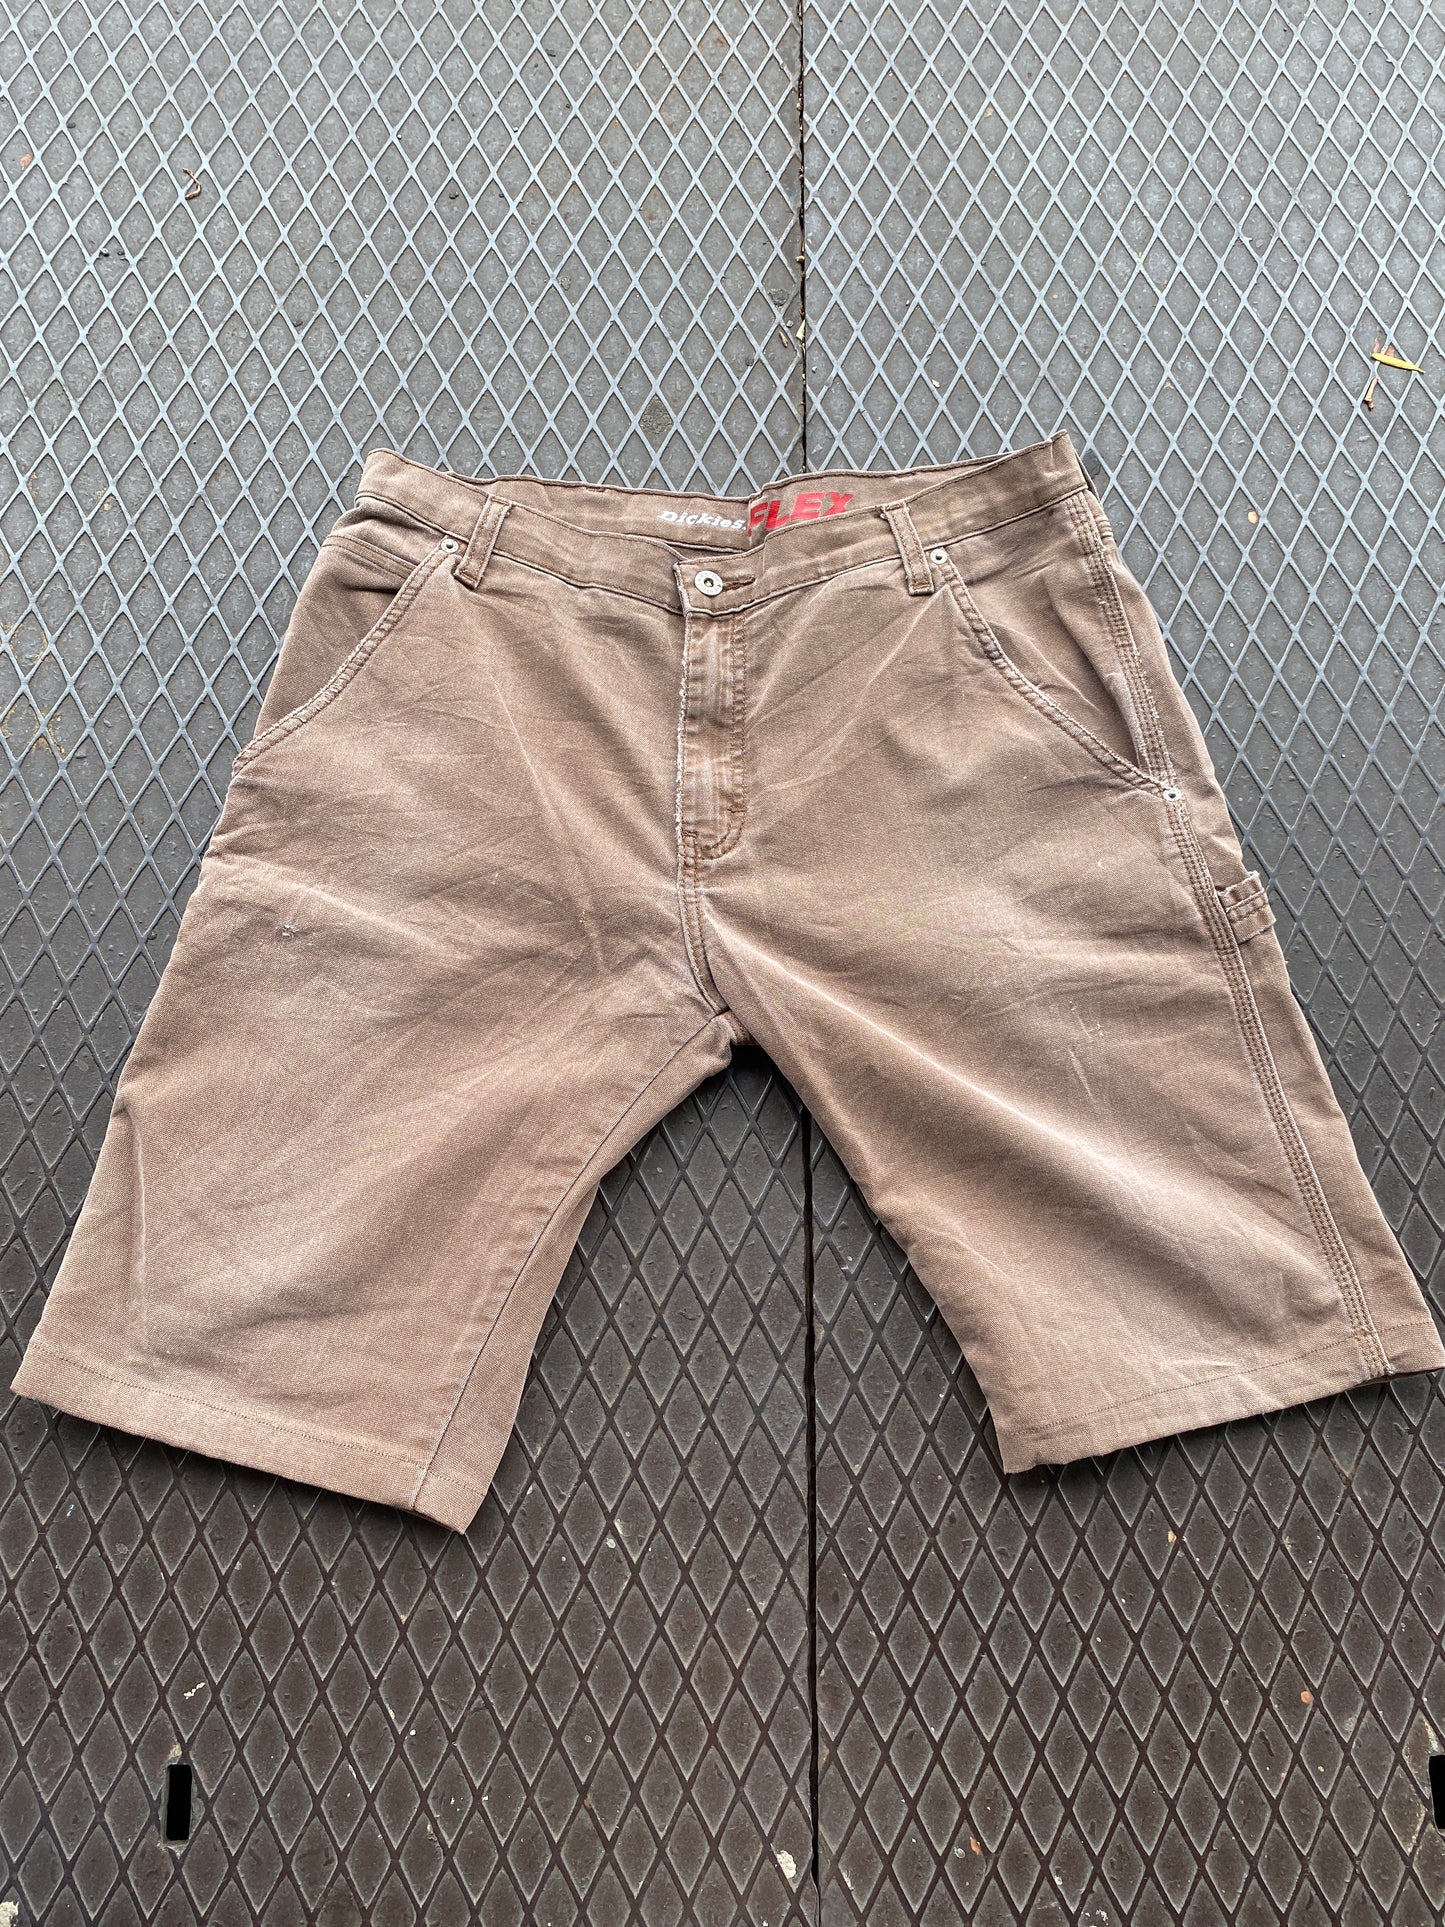 34 - Dickies Faded Chocolate Brown Carpenter Shorts